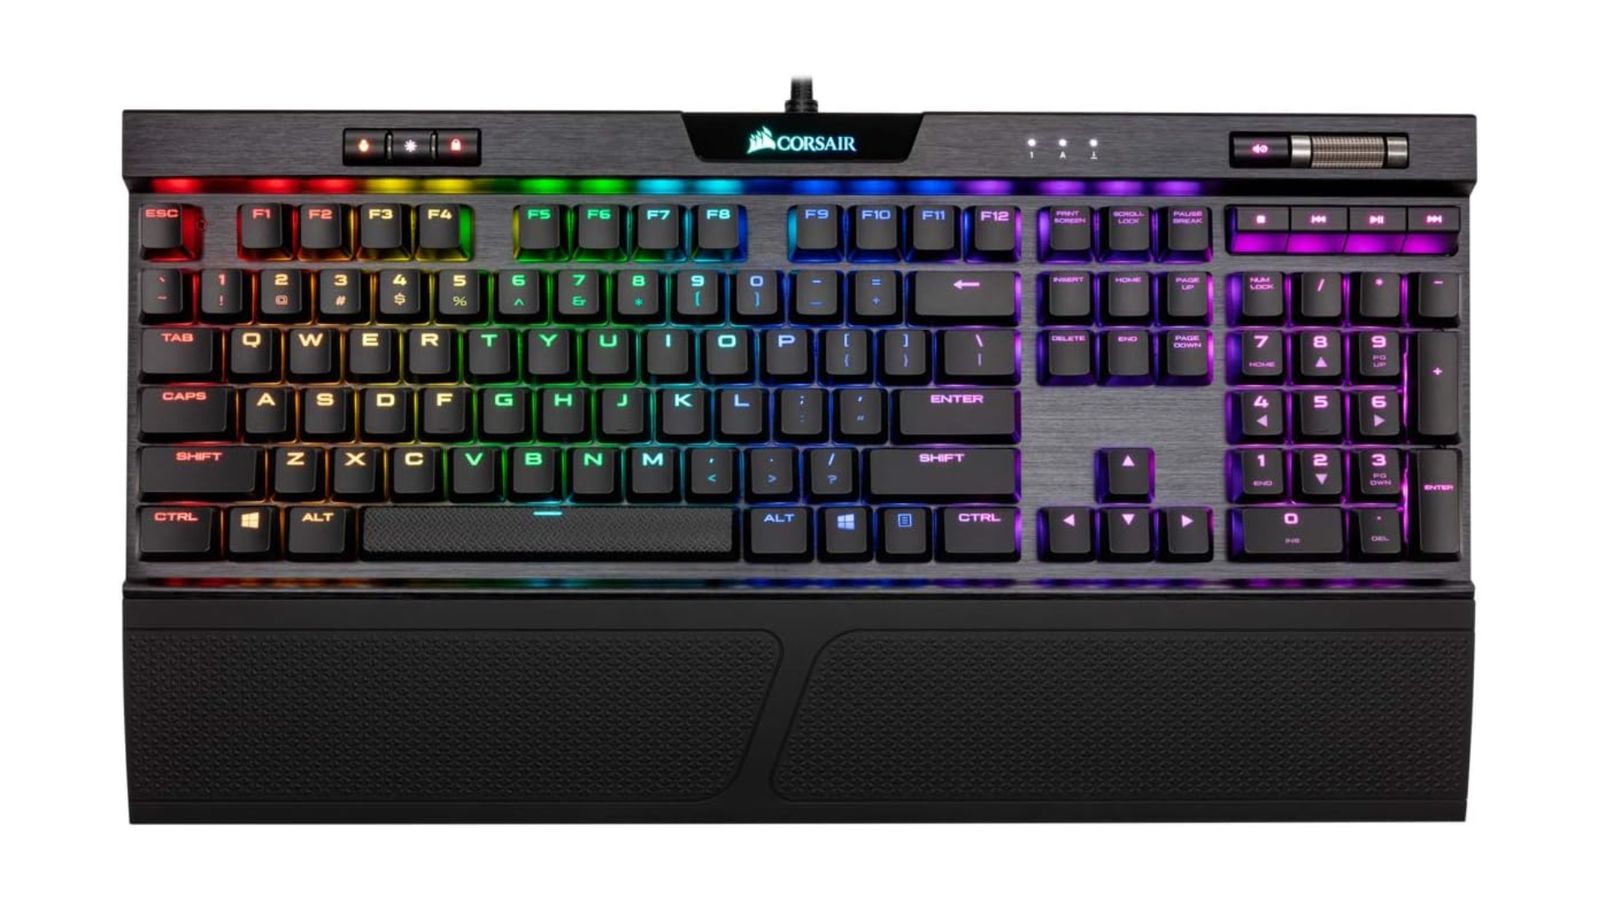 Corsair K70 RGB MK.2 product image of a black keyboard featuring multicoloured backlit keys.